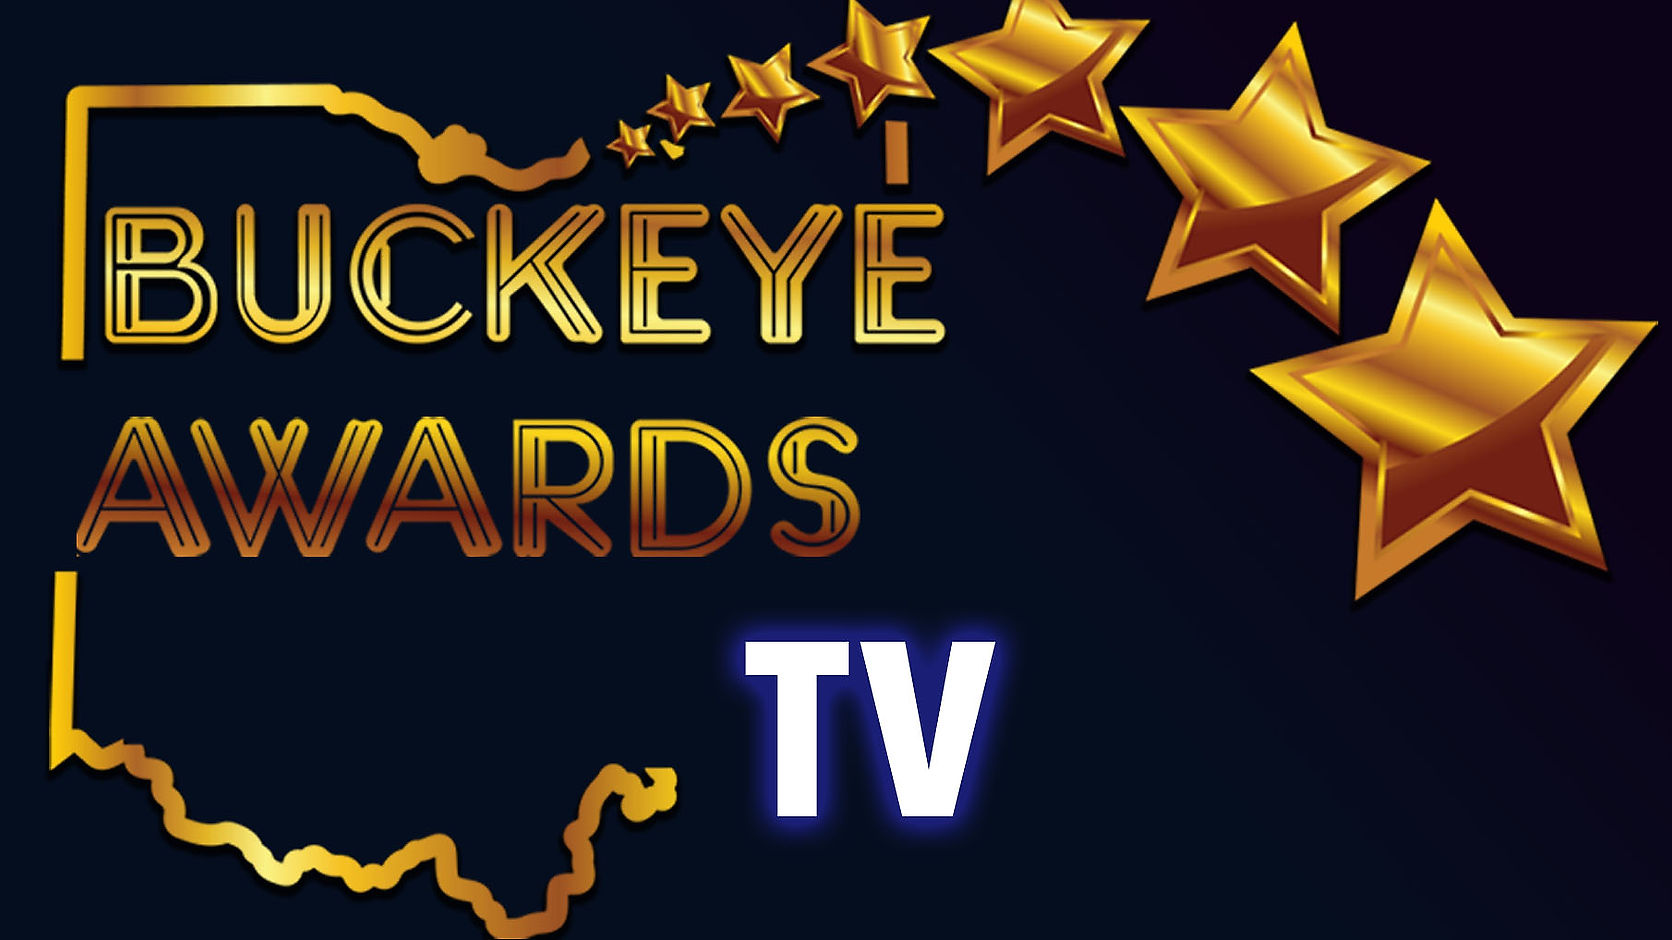 Buckeye Awards TV